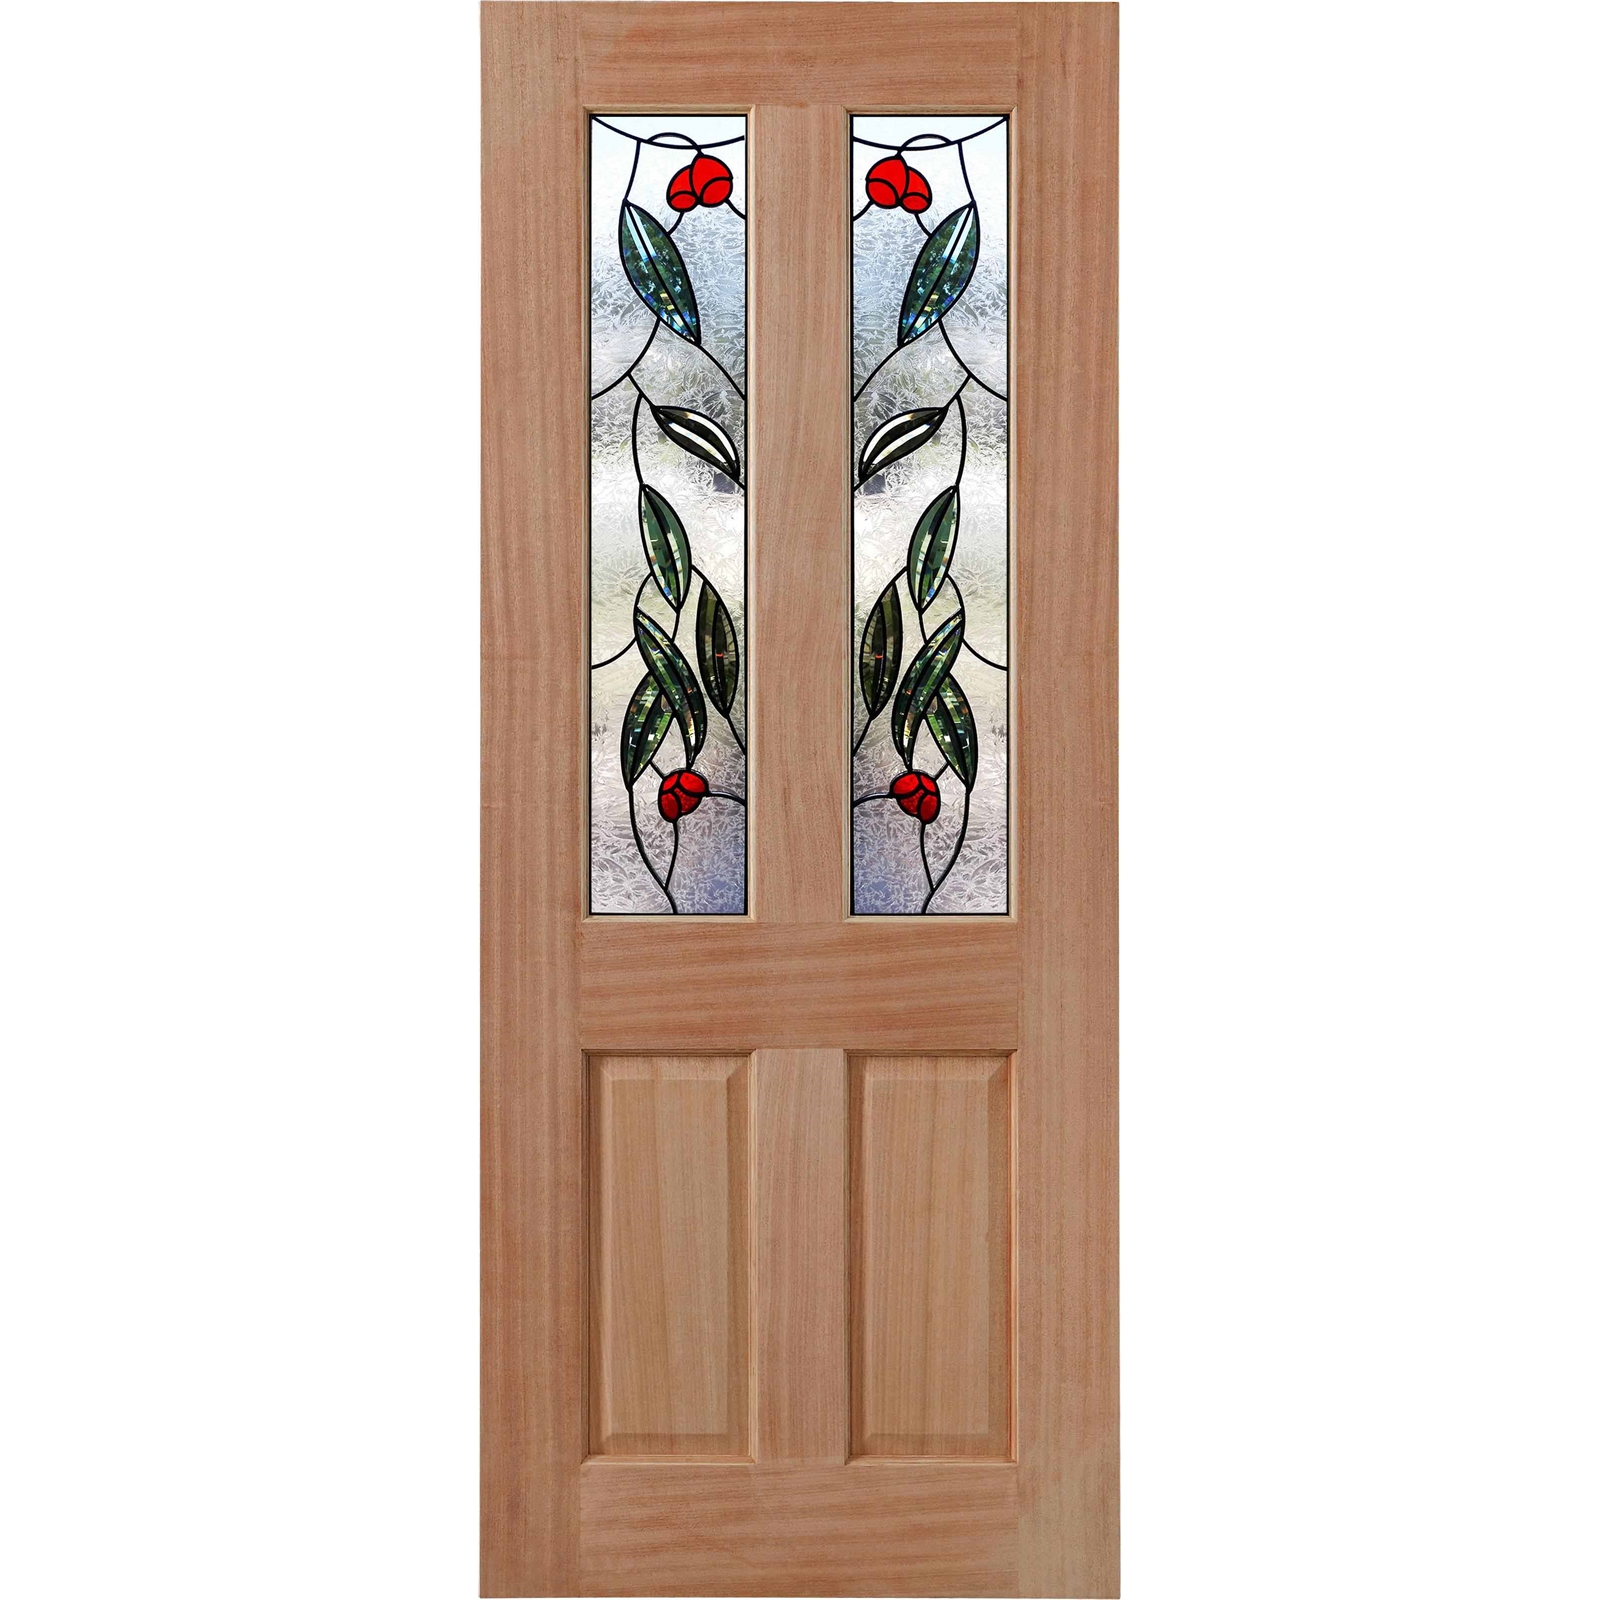 Woodcraft Doors 2040 x 820 x 40mm Cass Entrance Door With Gumleaf Glass